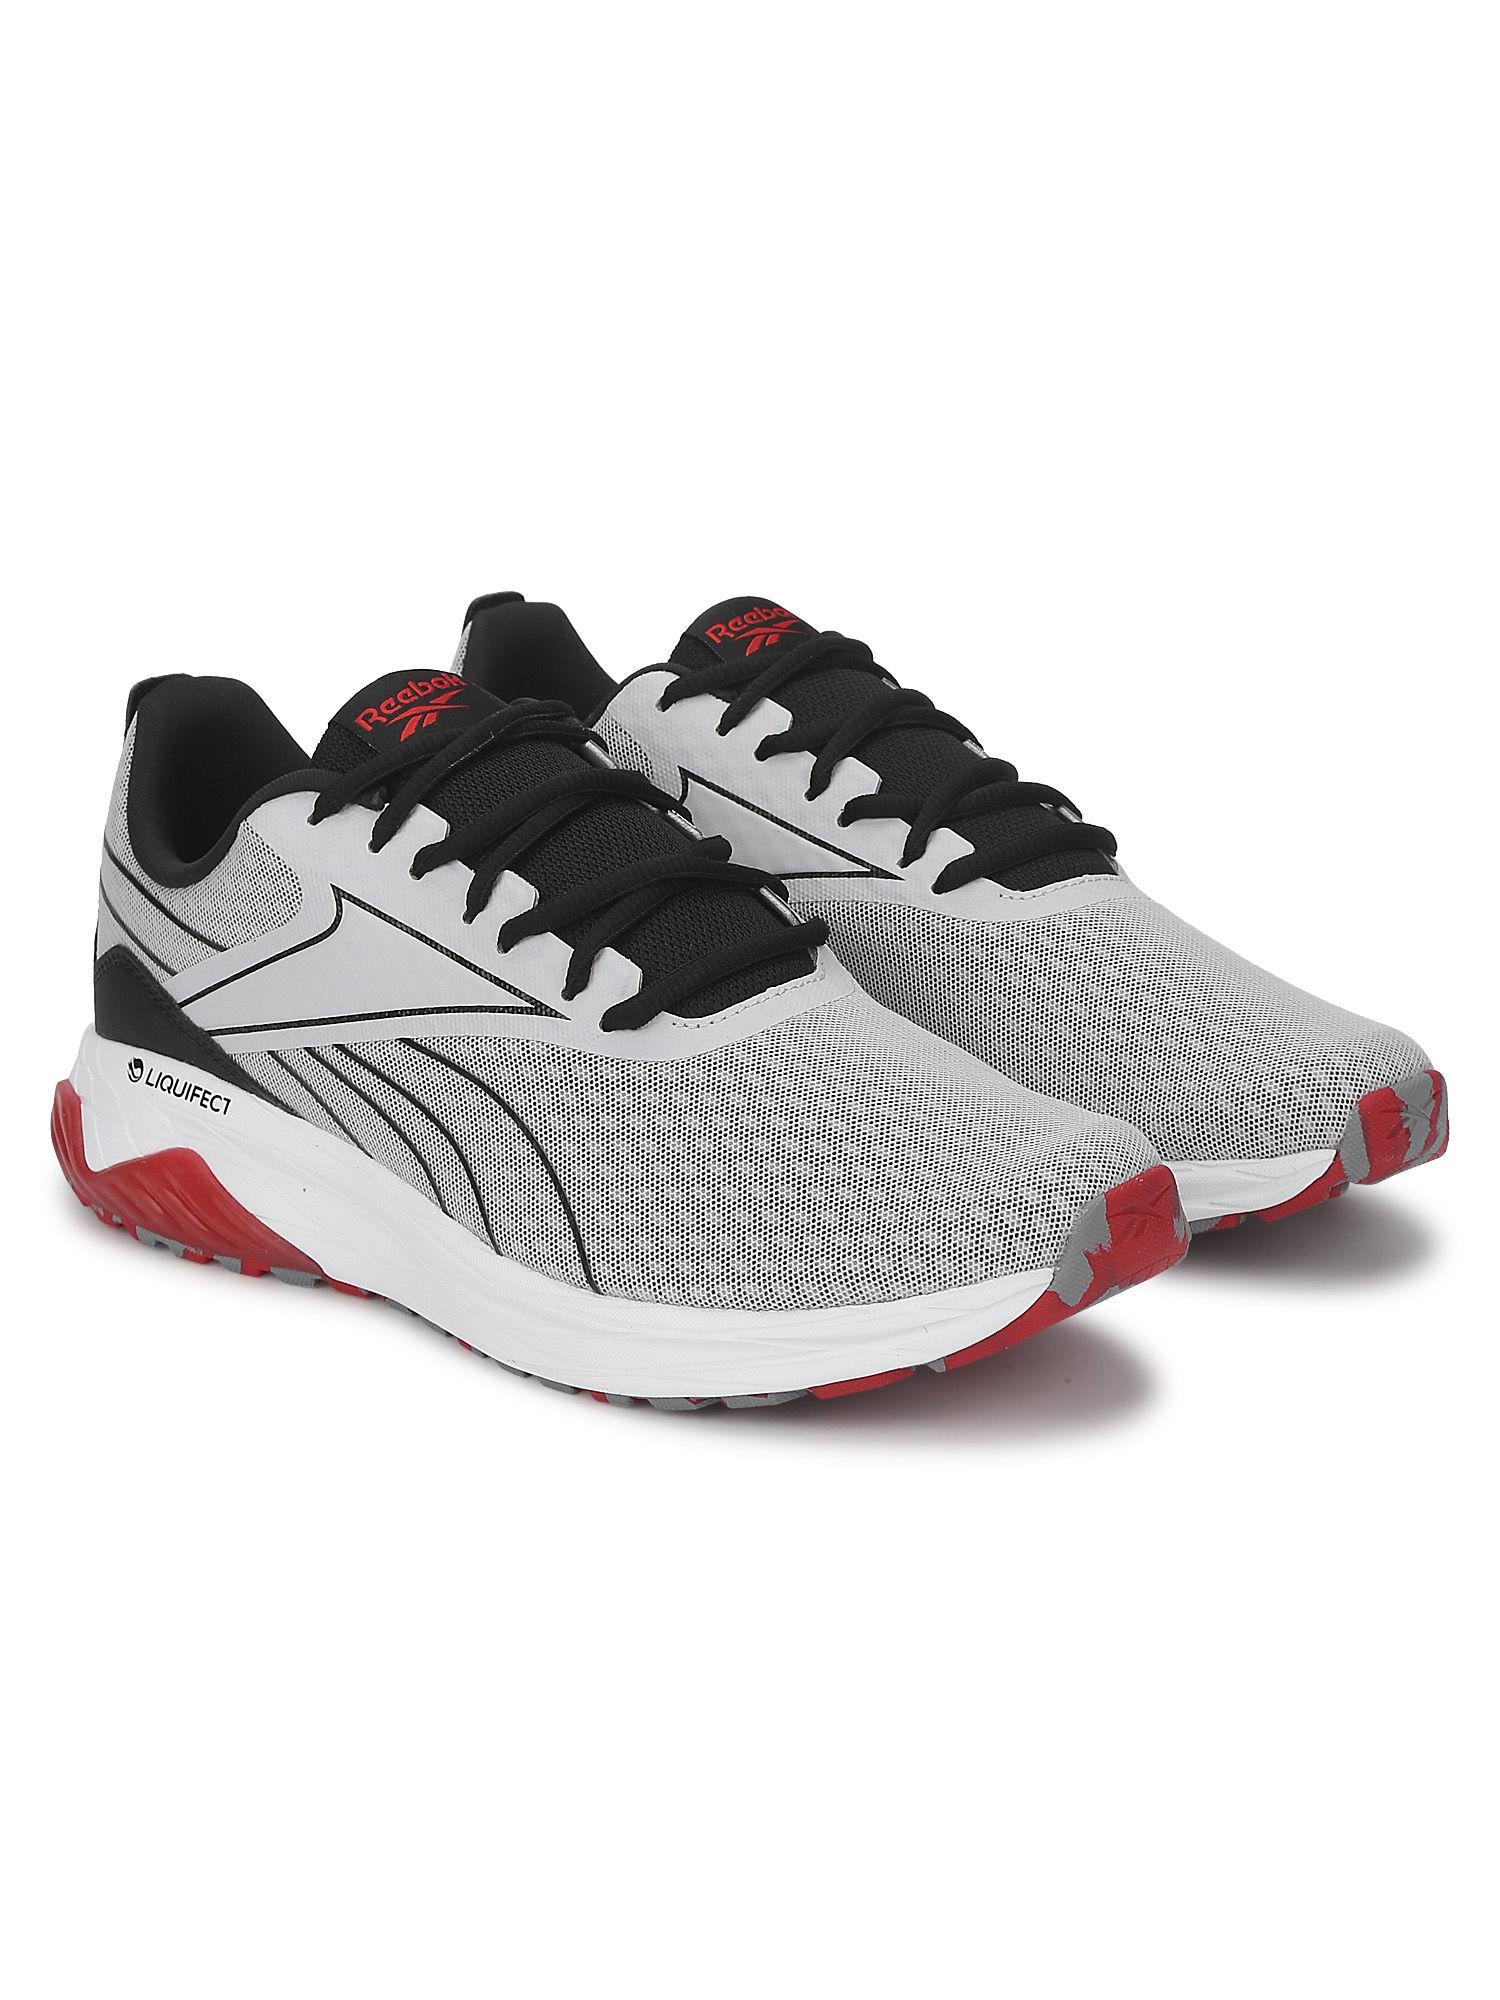 liquifect 180 2.0 grey running shoes